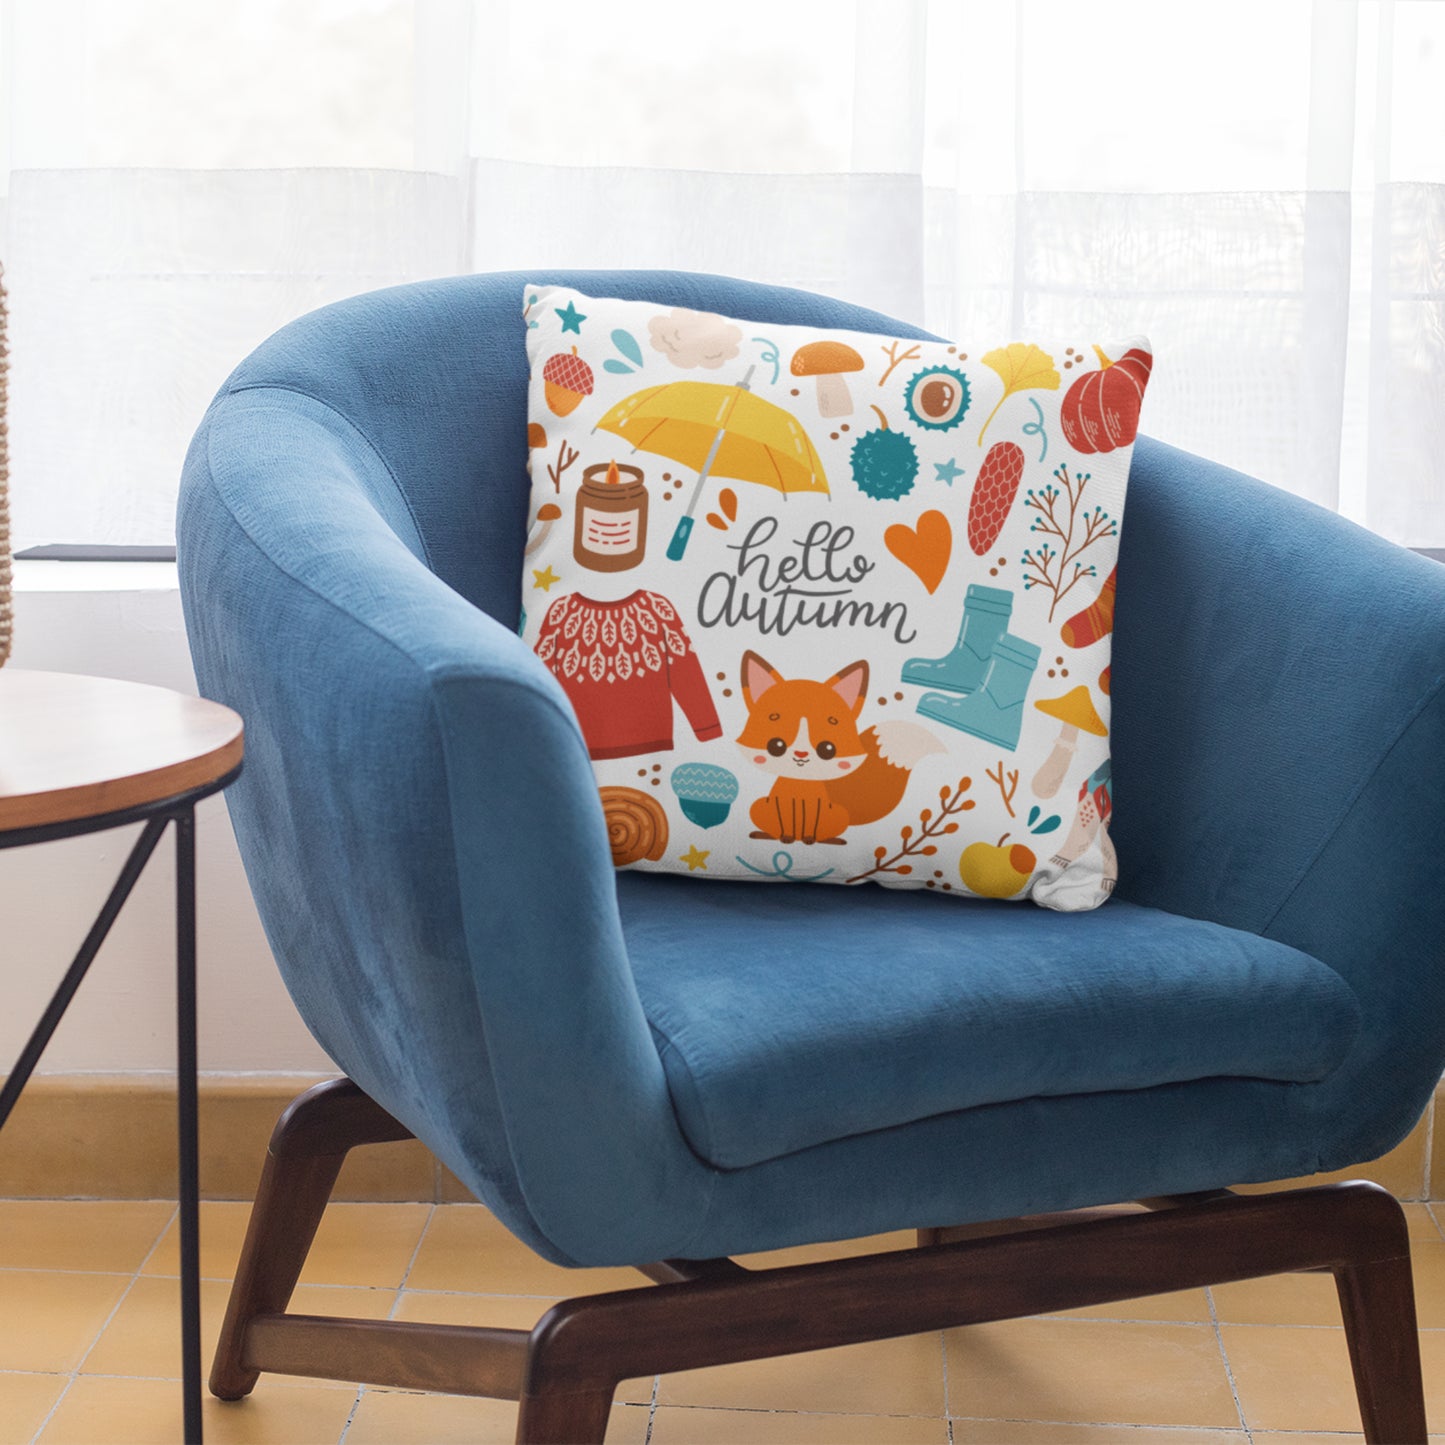 Hello Autumn Kids Room Pillow Case, Fall Season Decor Cushion Cover by Homeezone